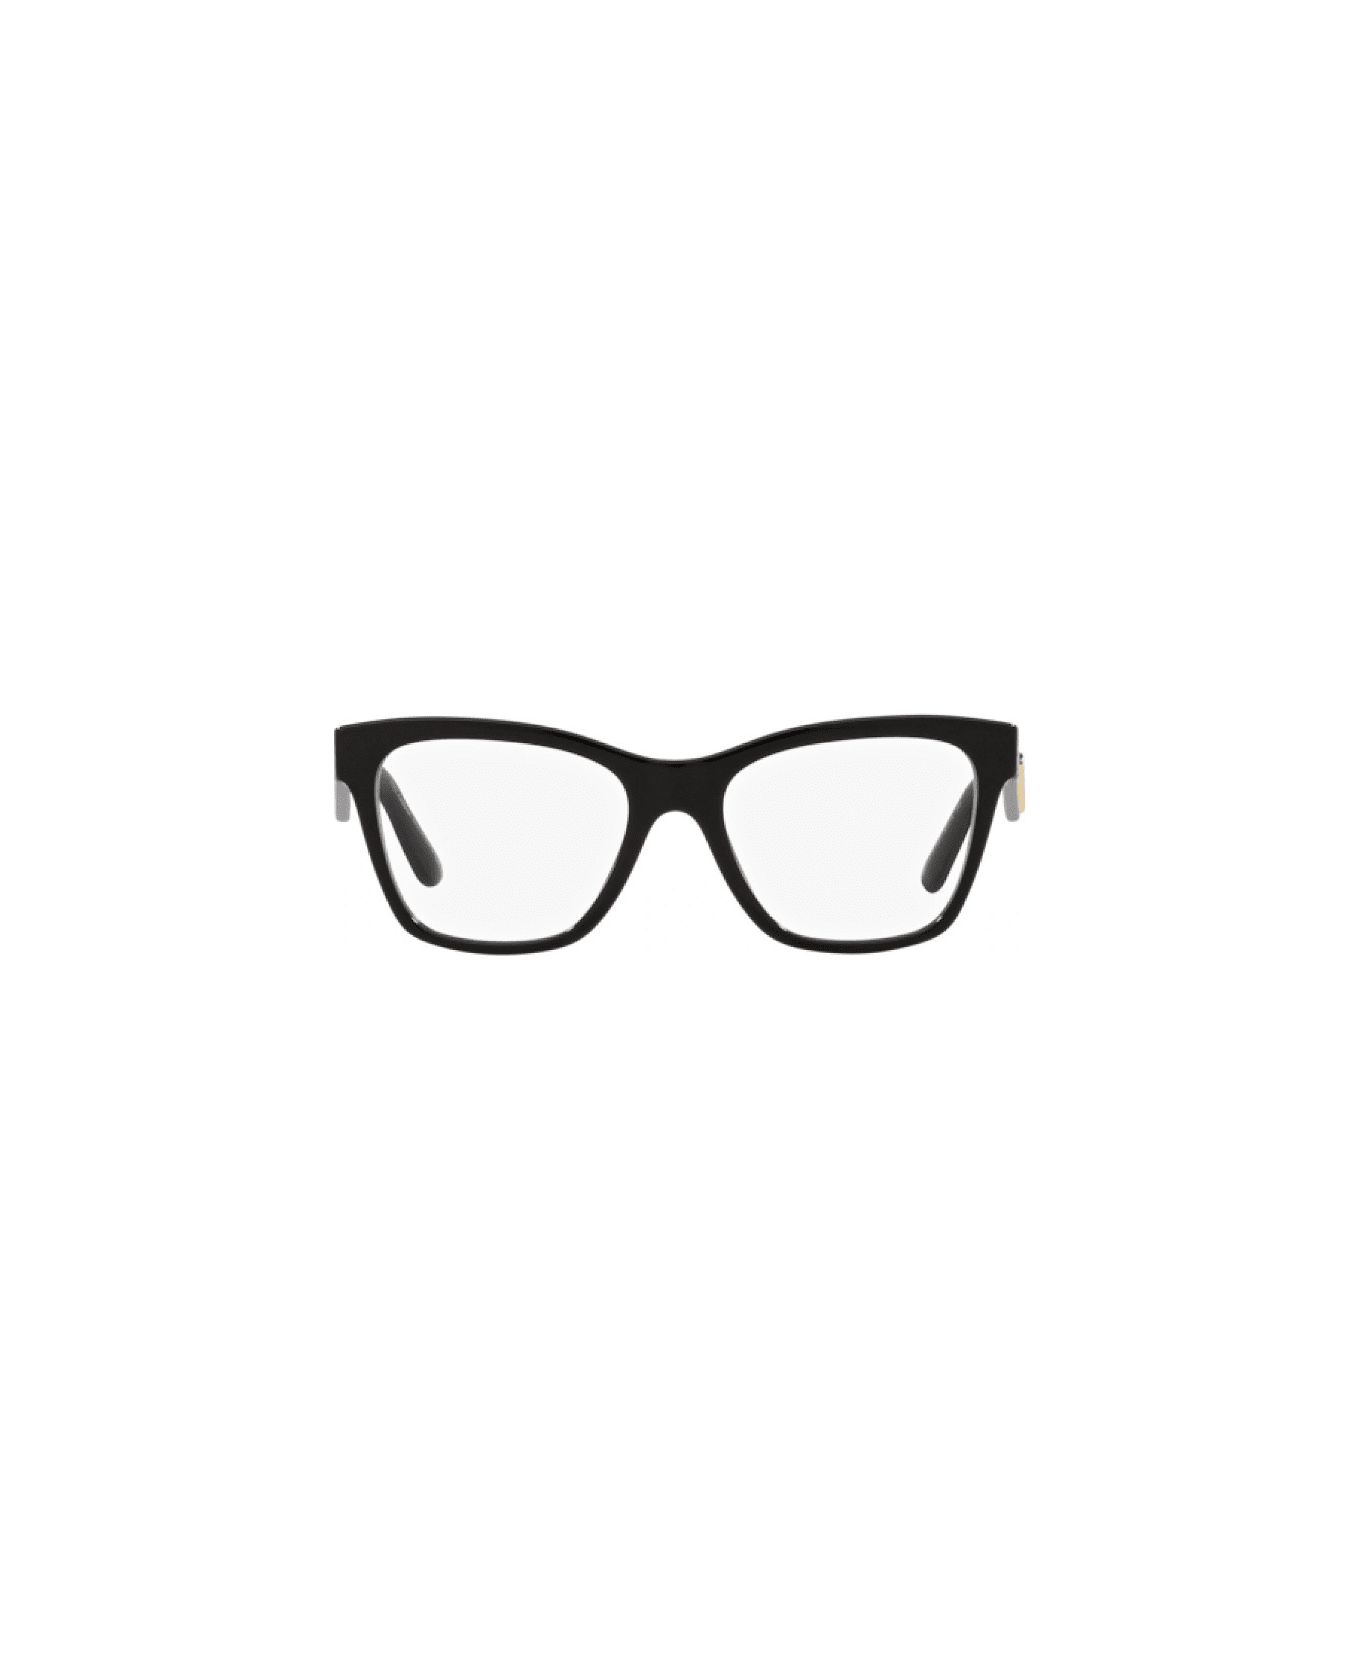 Dolce & Gabbana Eyewear DG3374-501 Glasses - Nero アイウェア